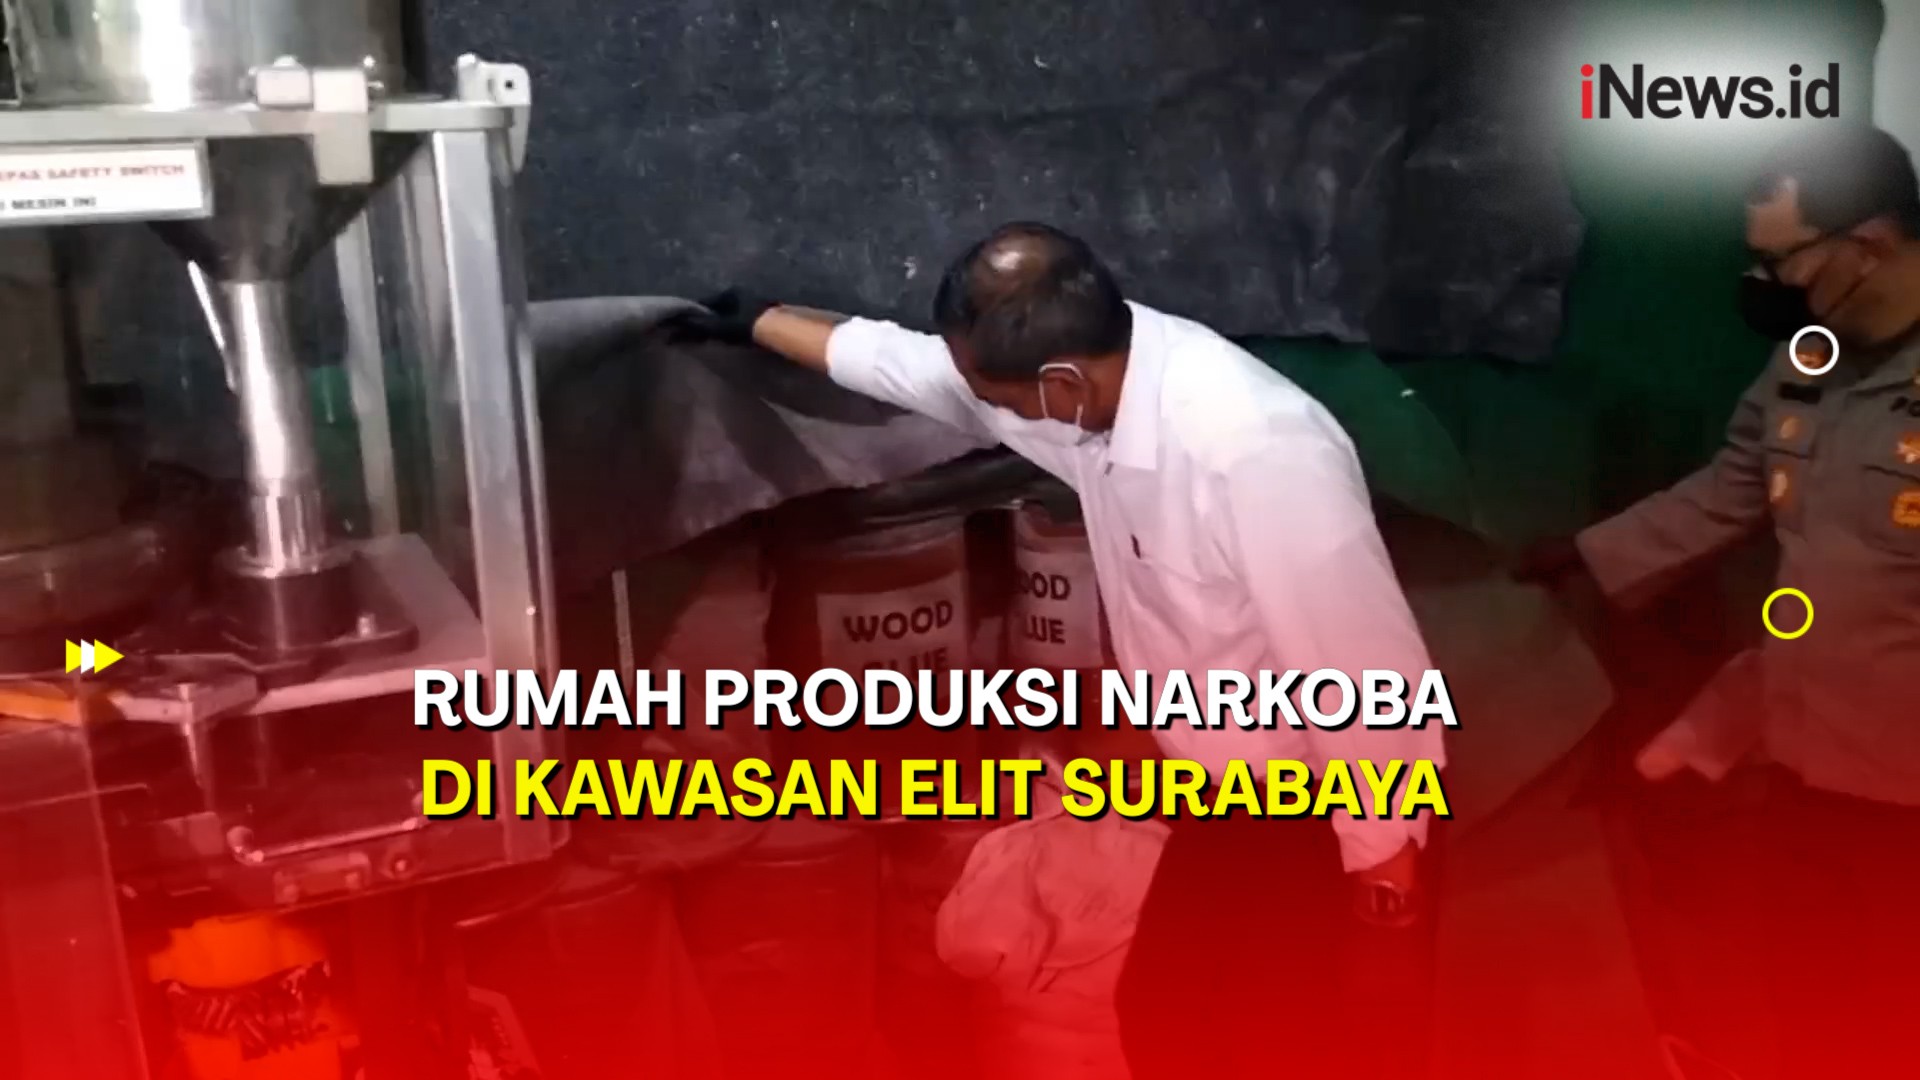 Polda Jatim Bongkar Pabrik Narkoba di Kawasan Elit Surabaya, 6 Juta Obat Berbahaya Disita